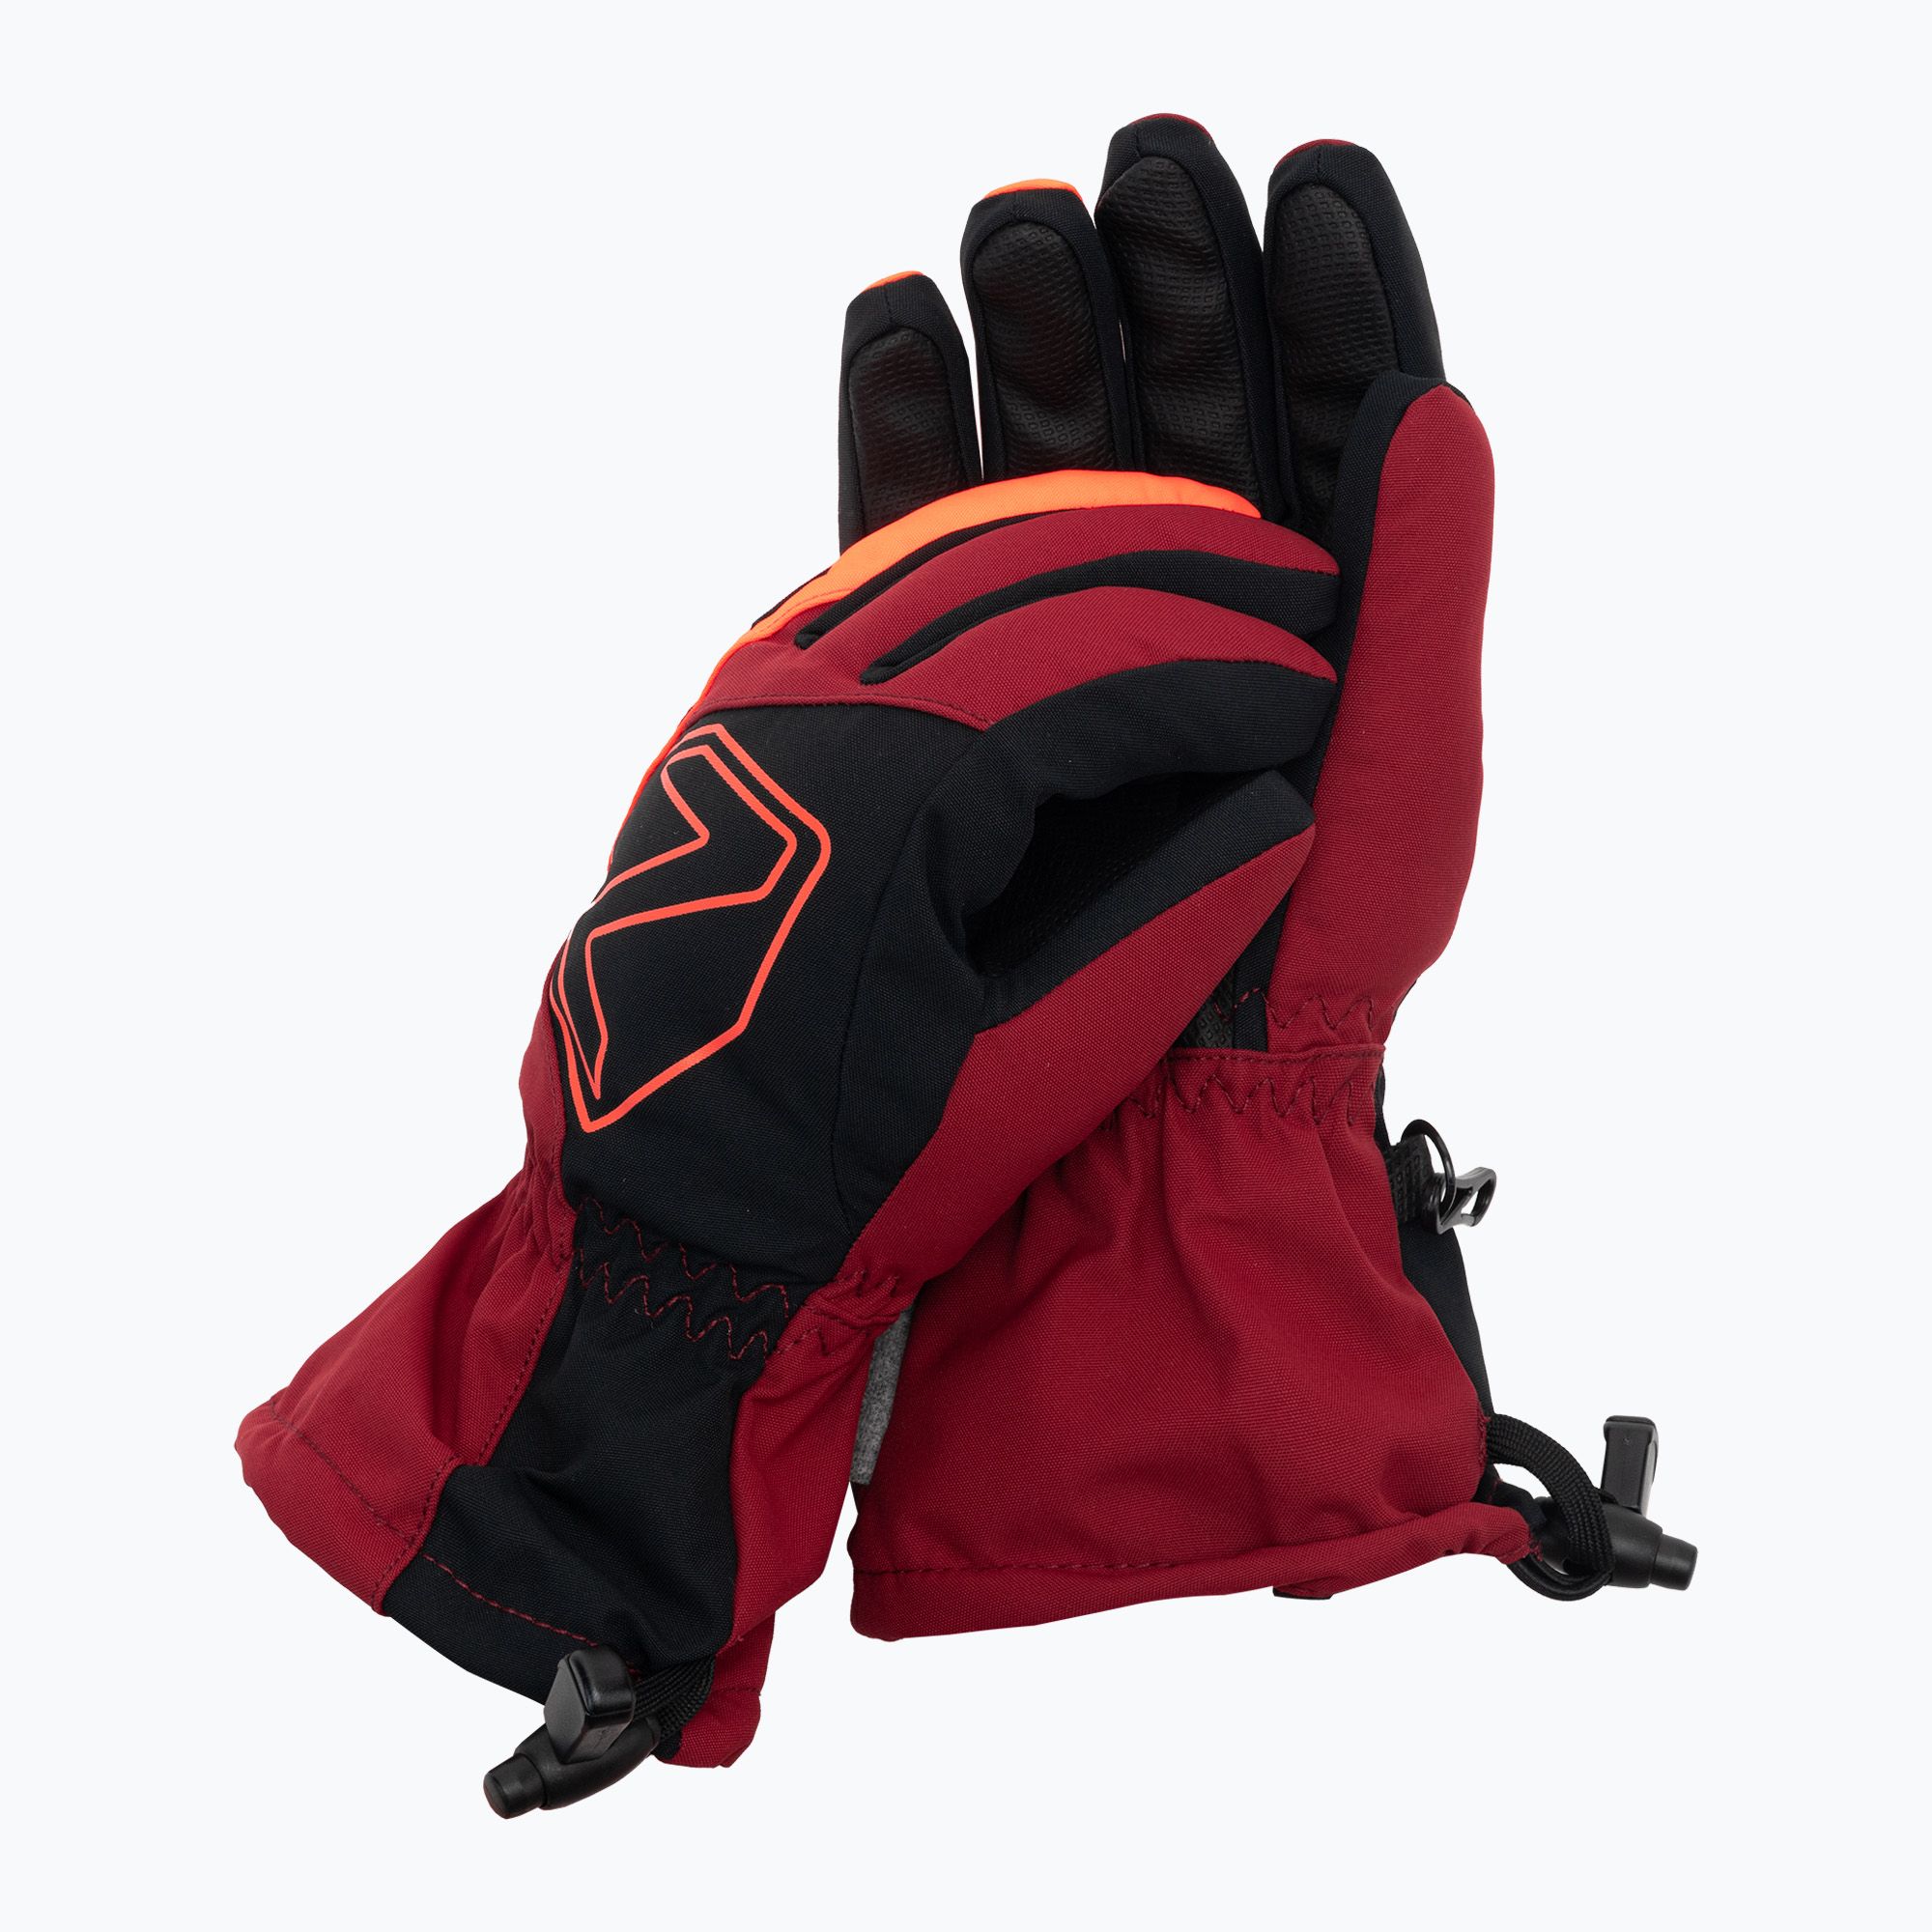 ZIENER Laval AS AW children\'s ski glove red 801995 | 